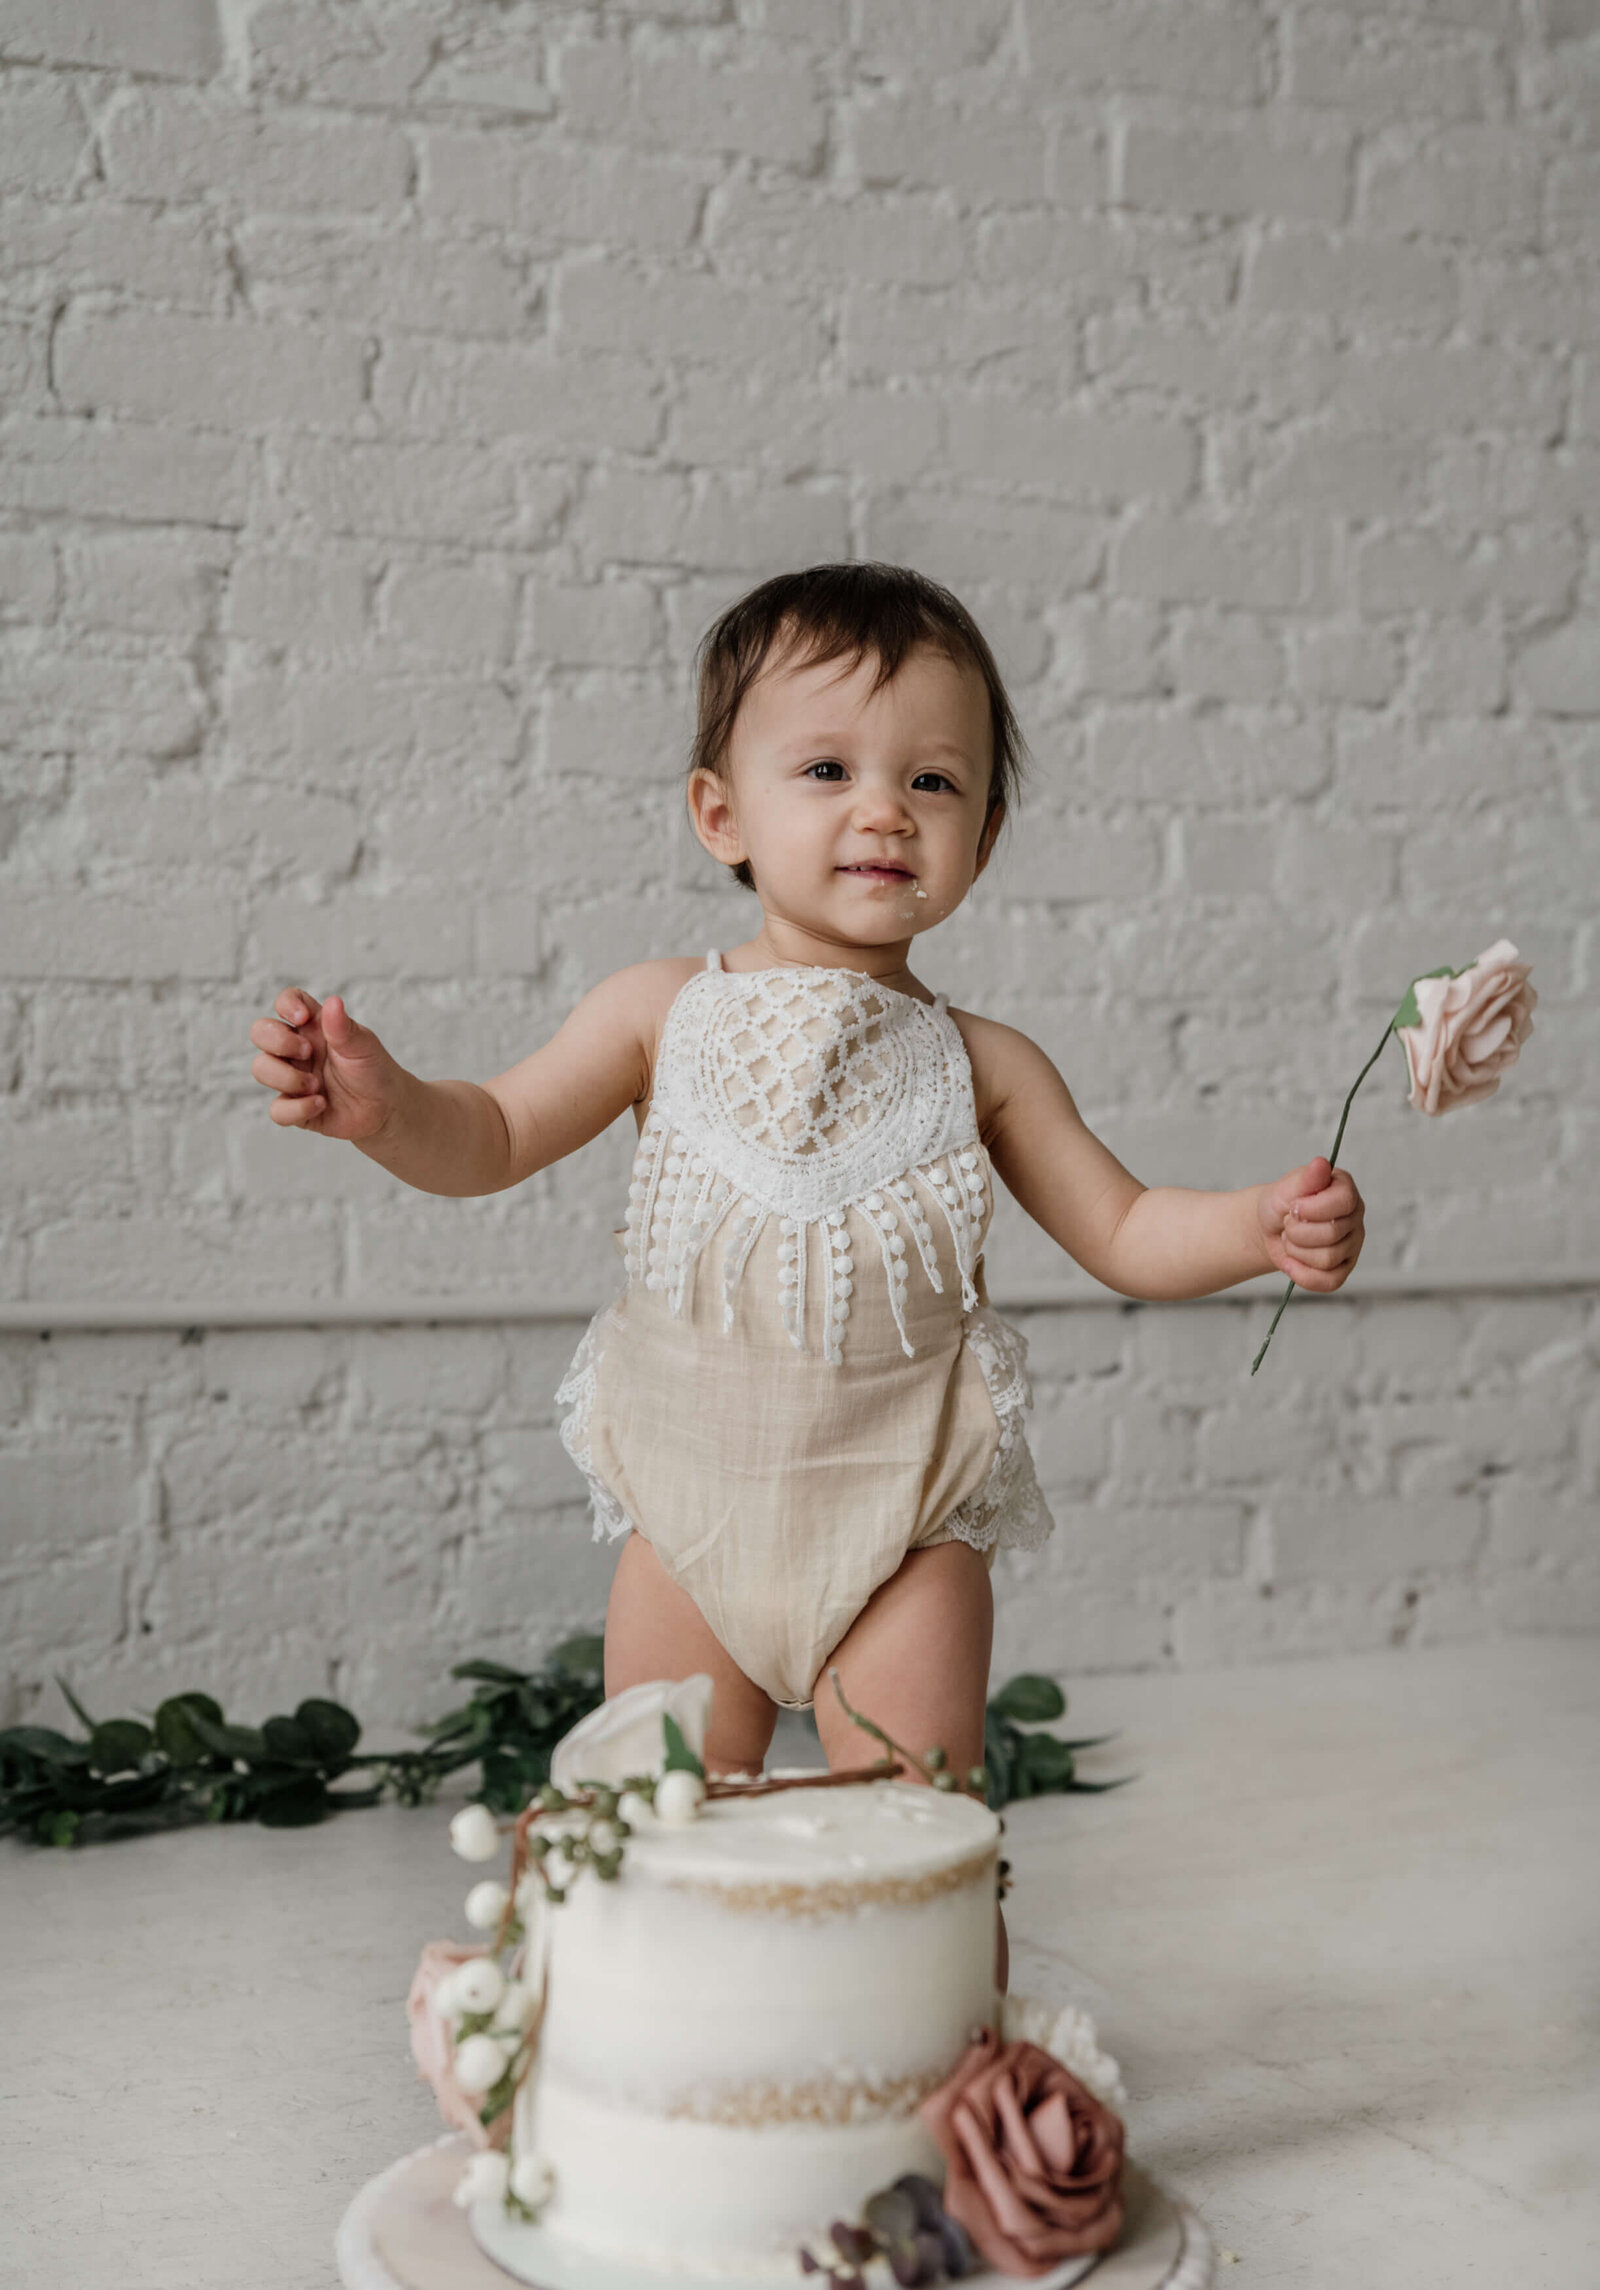 Baby girl holding flower behind her cake.